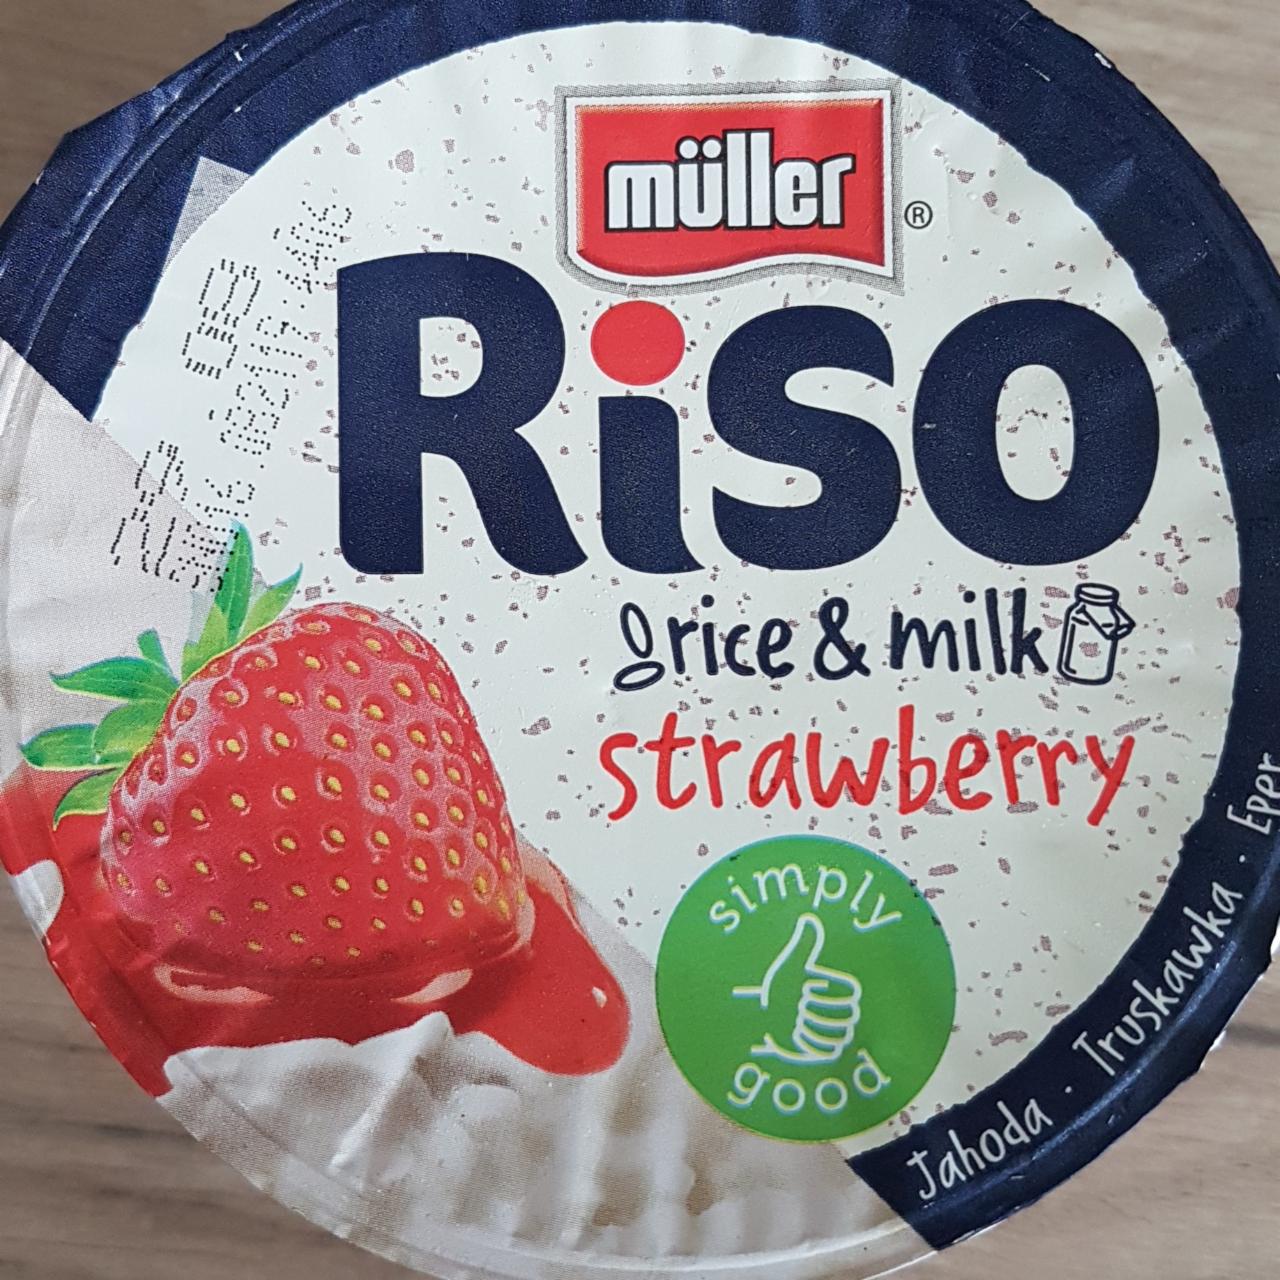 Zdjęcia - Riso rice & milk Strawberry Müller